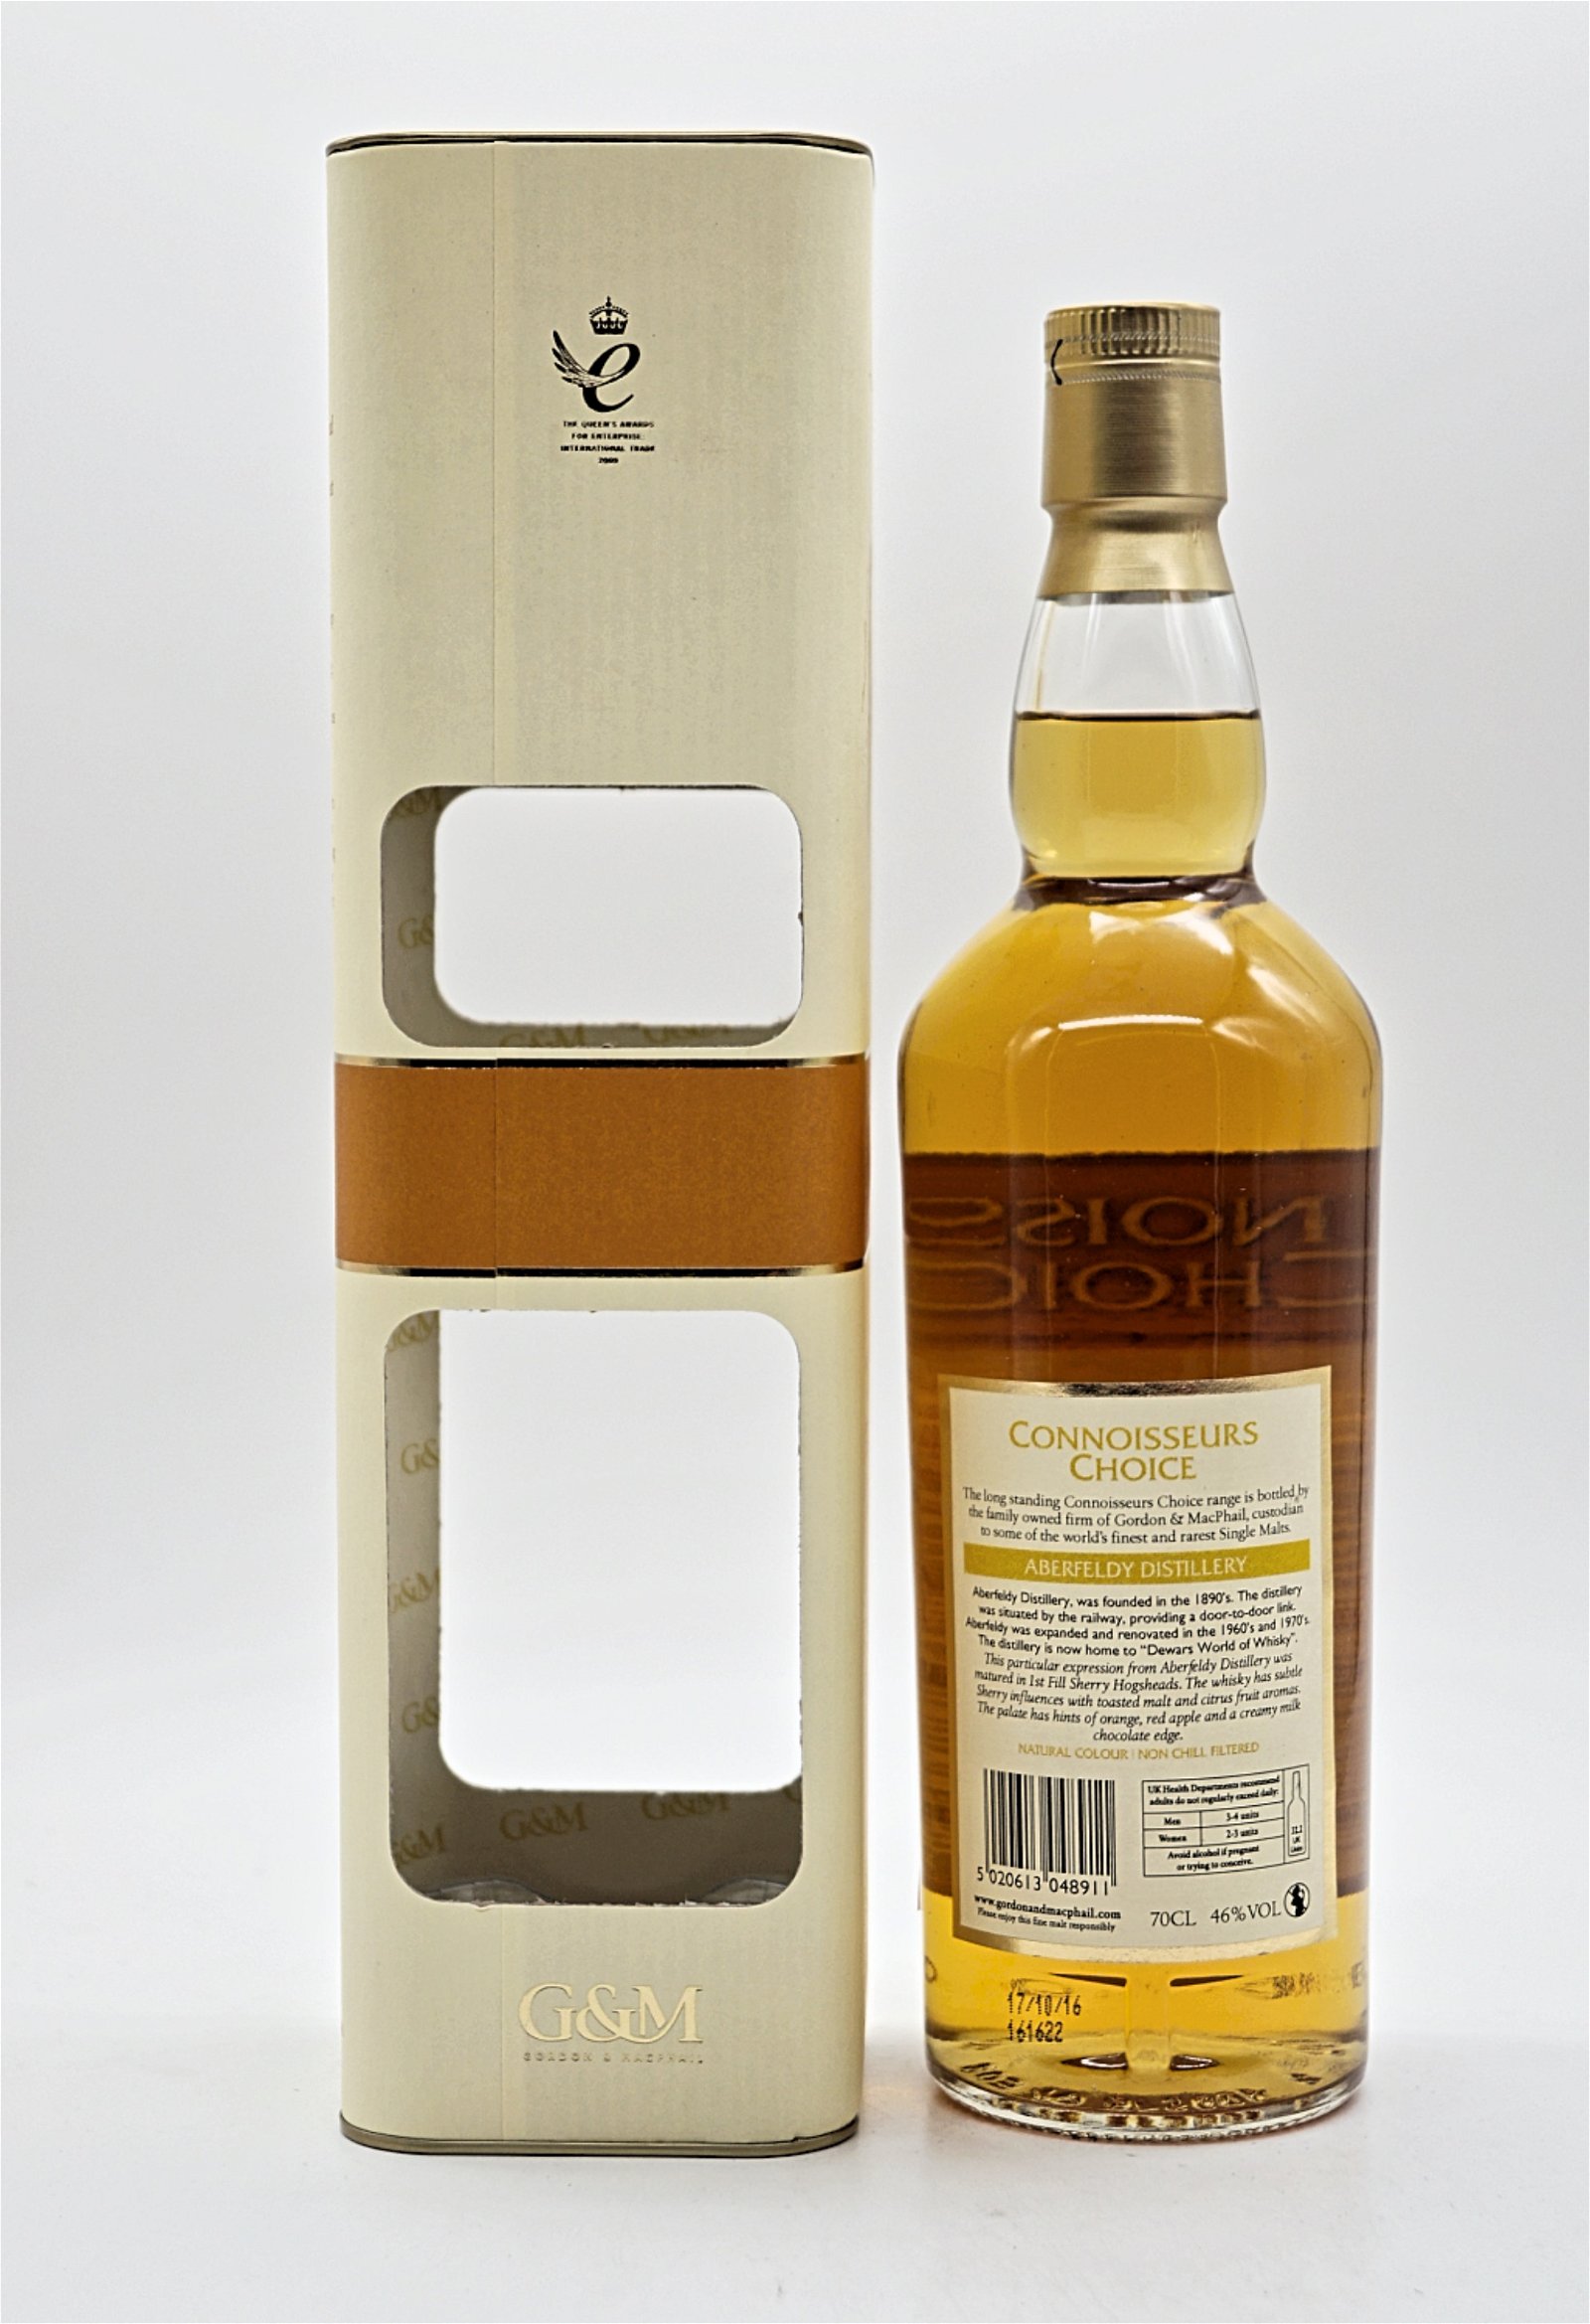 Gordon & Macphail Connoisseurs Choice Aberfeldy Distillery 1999/ 2016 Single Malt Scotch Whisky